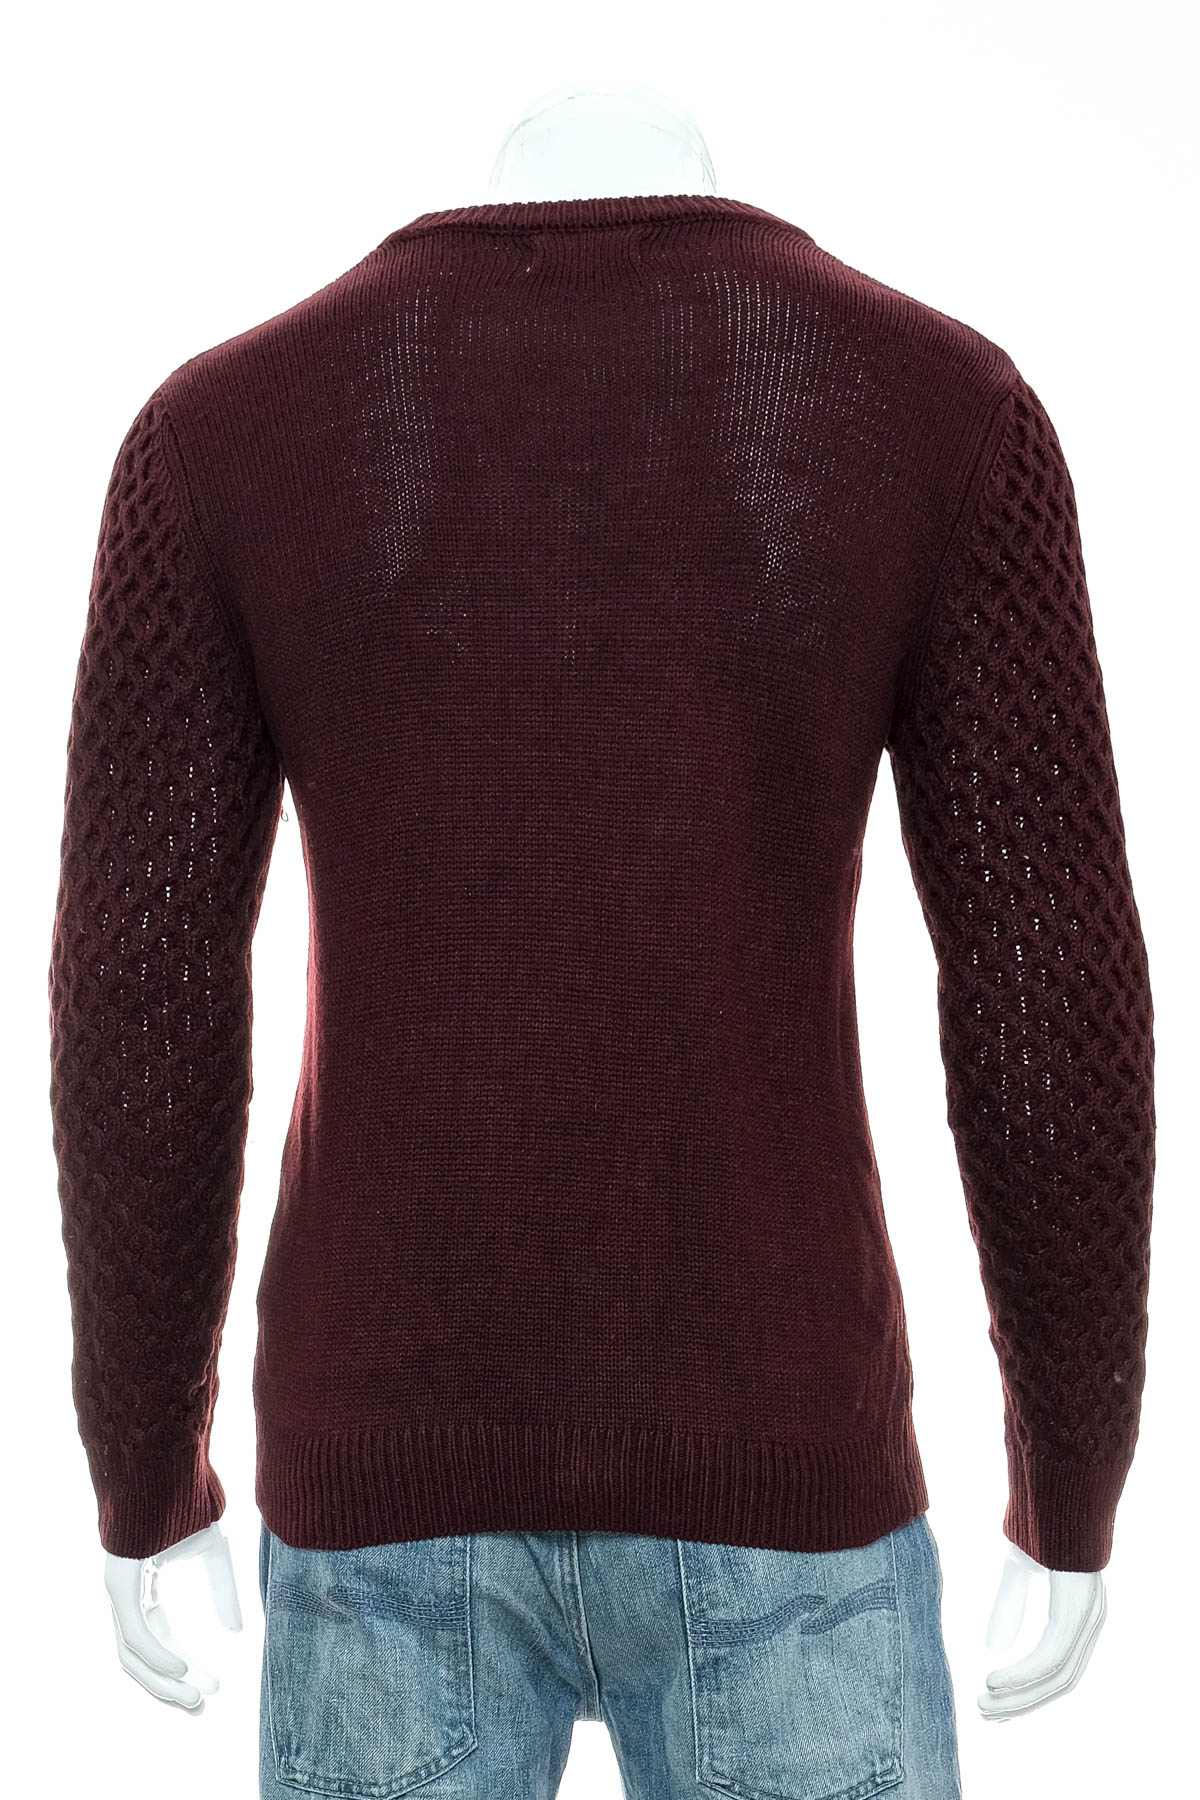 Men's sweater - PRIMARK - 1